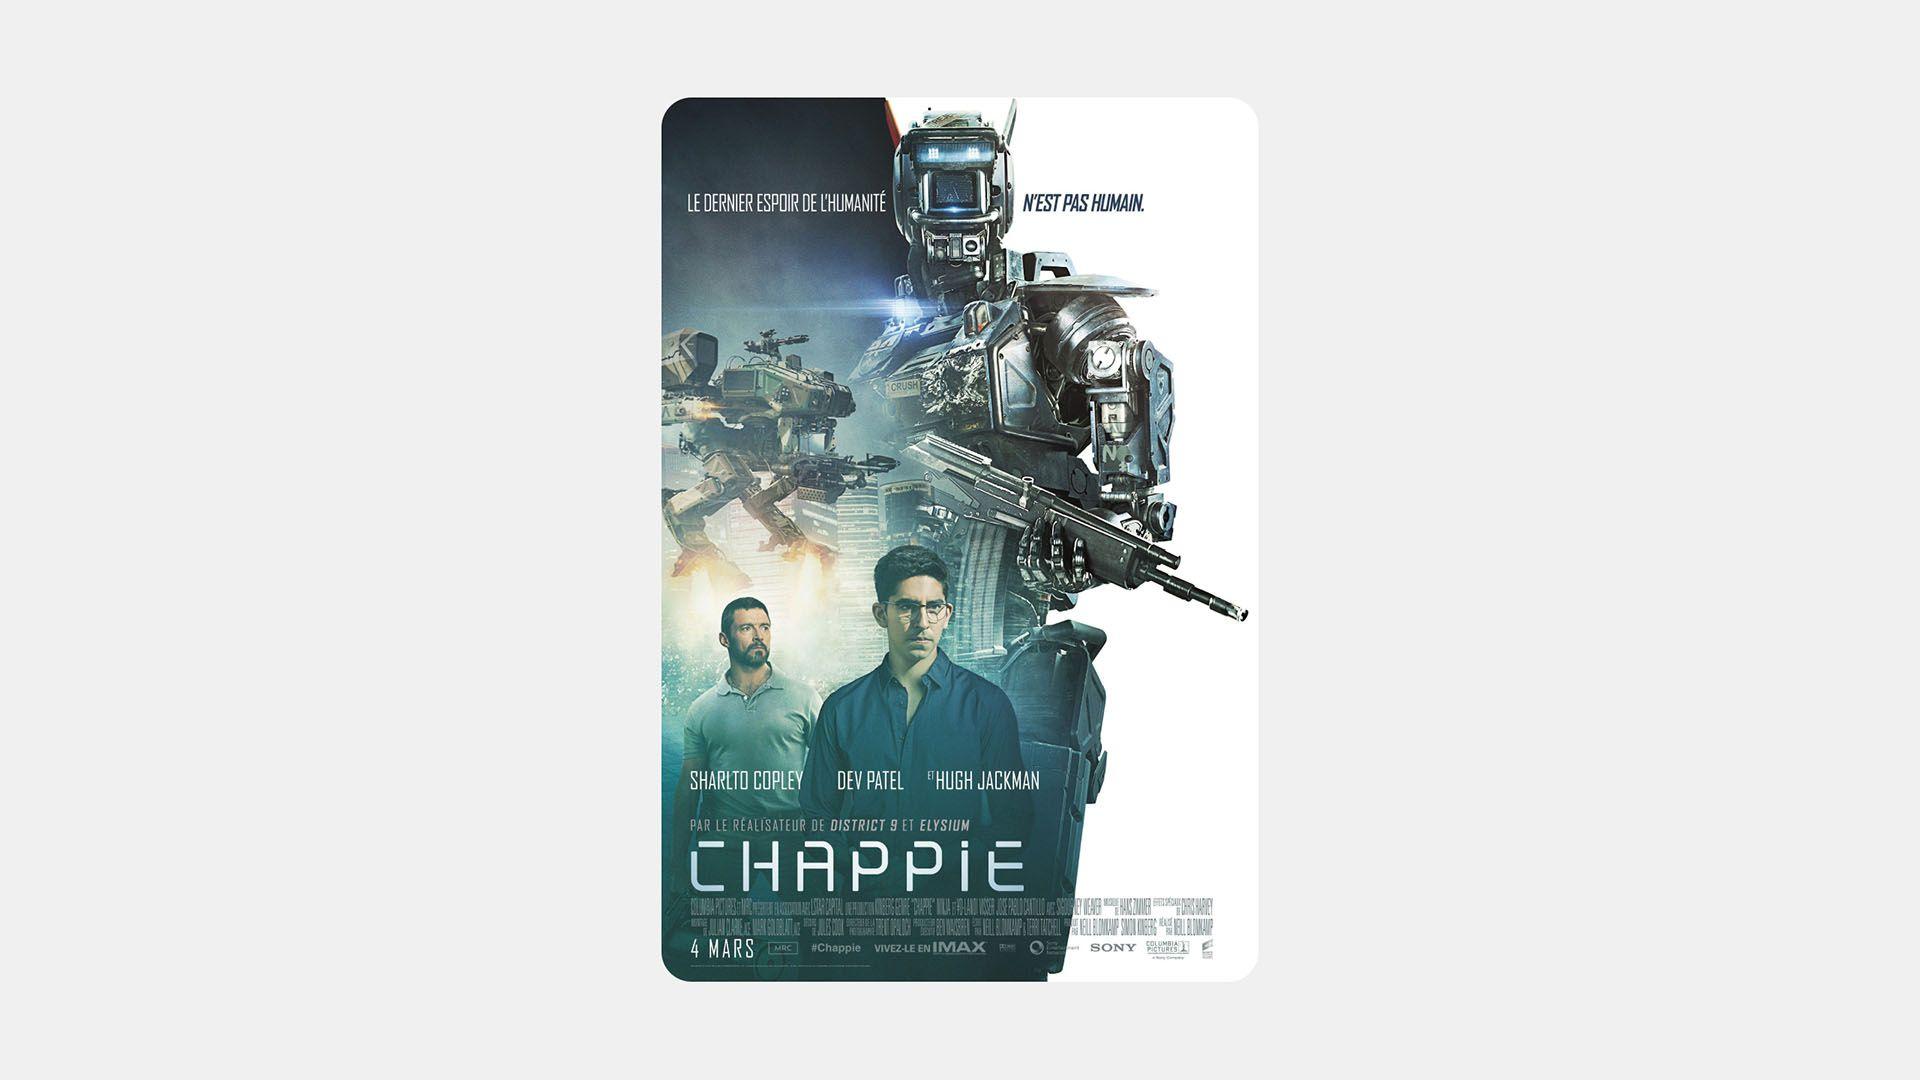 Chappie movie poster